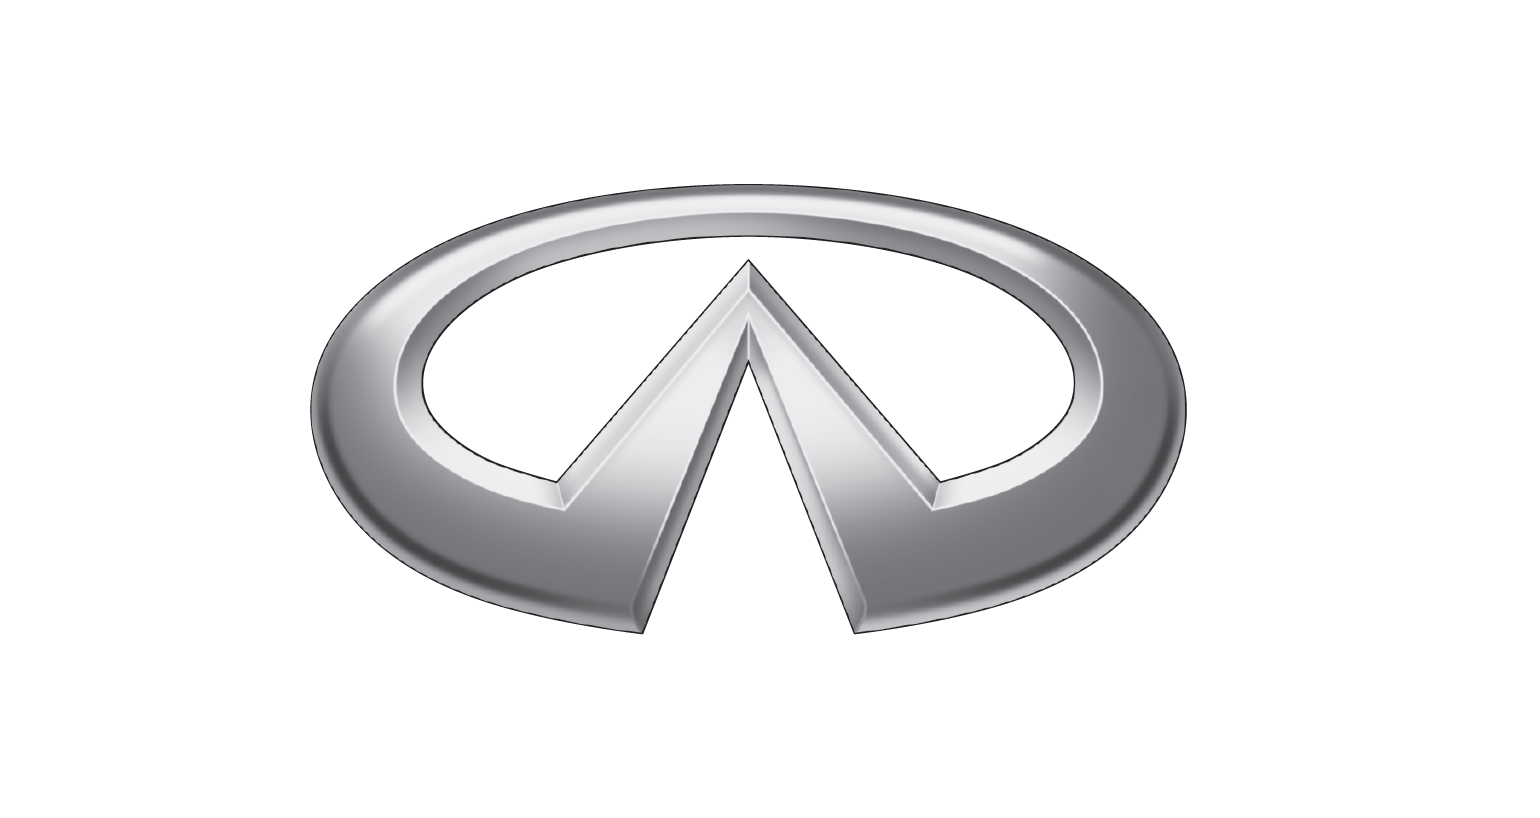 Silver Oval Car Logo - Infiniti Logo, Infiniti Car Symbol Meaning and History | Car Brand ...